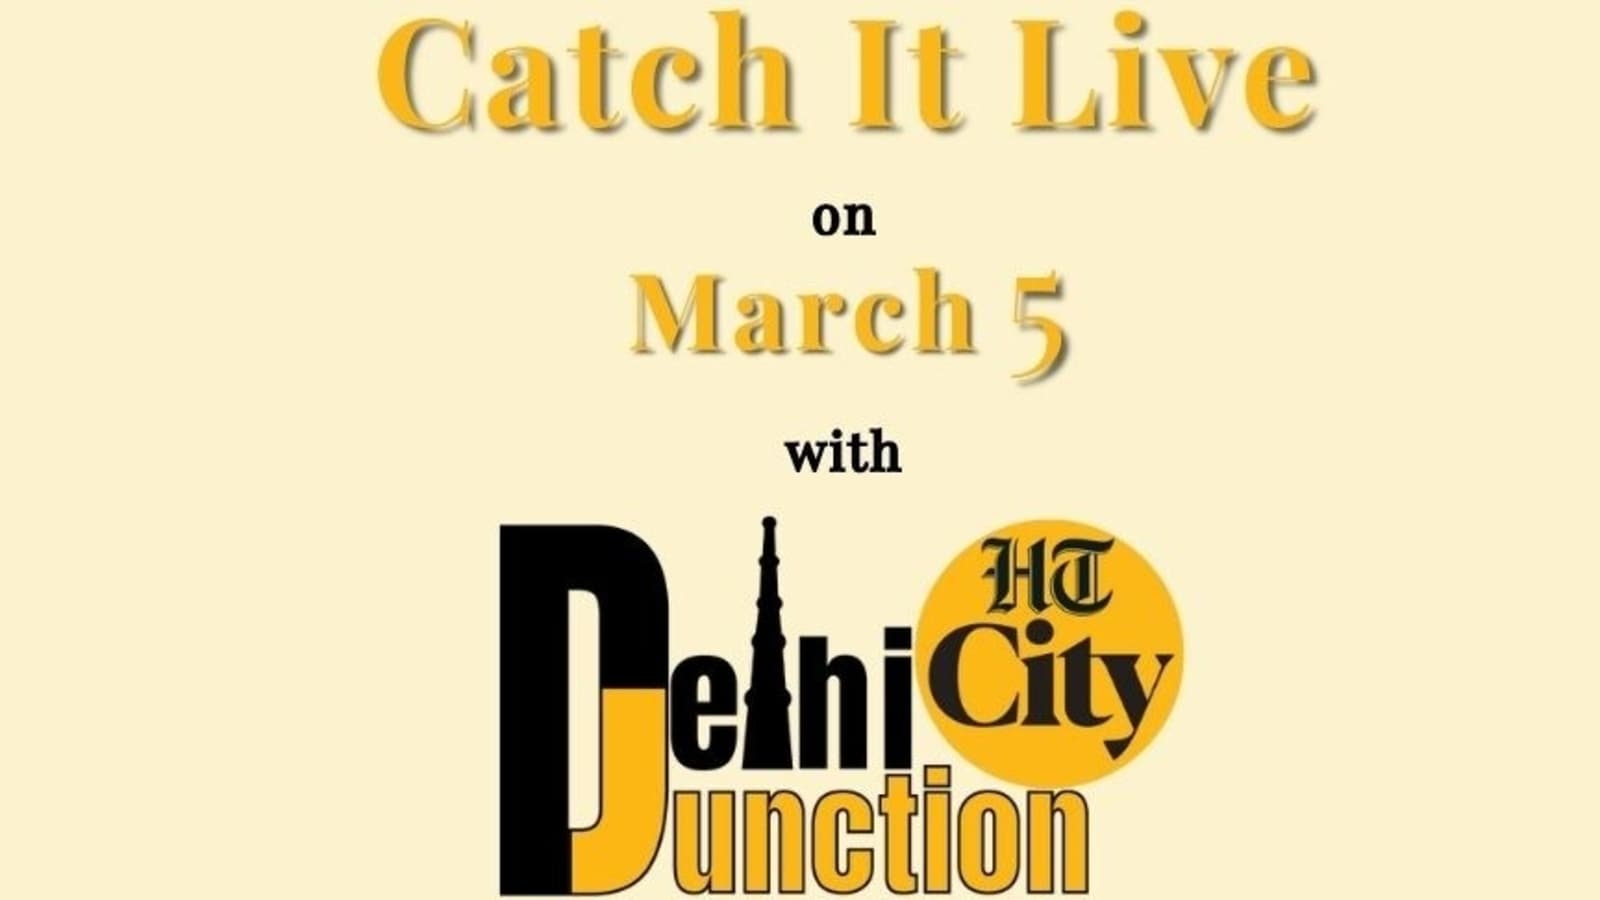 HT City Delhi Junction: Catch It Live on March 5